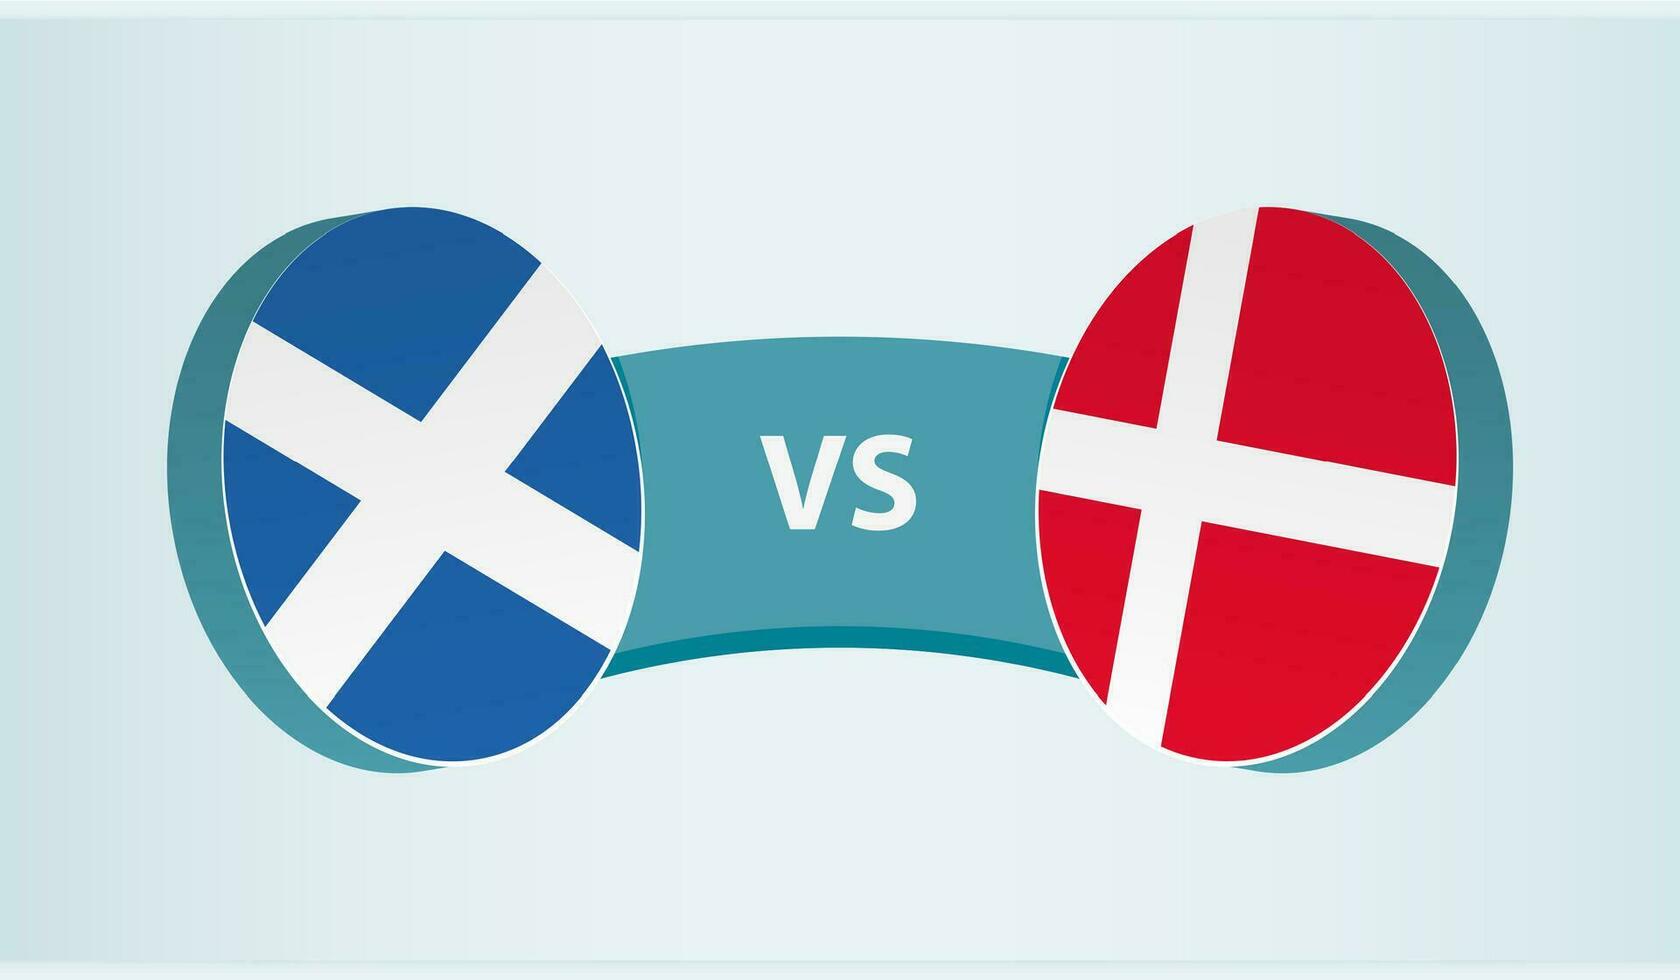 Scotland versus Denmark, team sports competition concept. vector